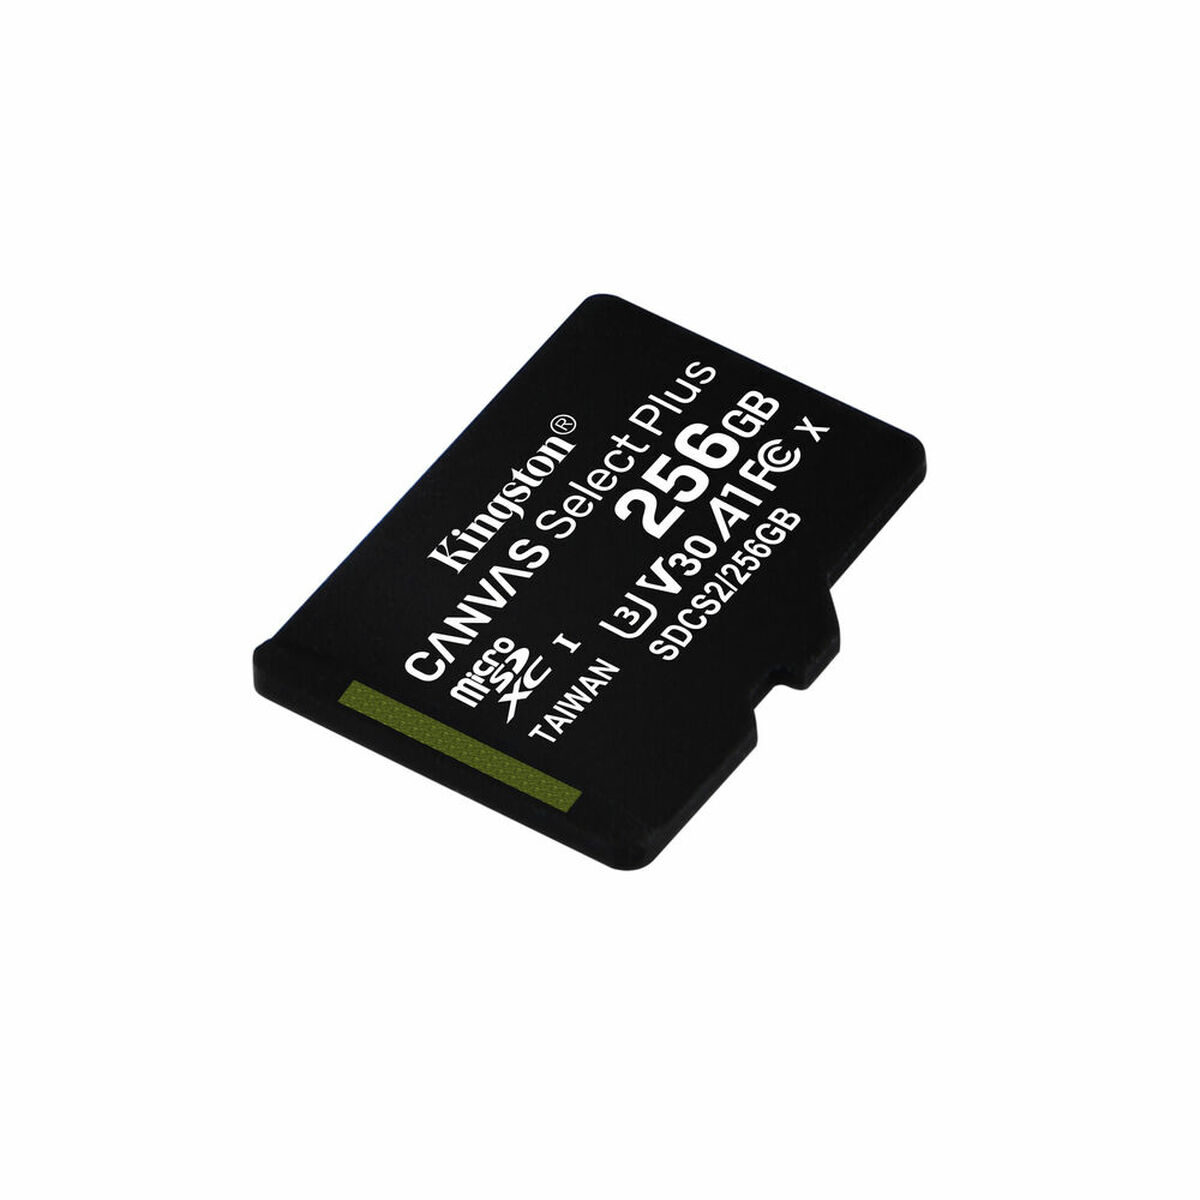 SDCS2/256GBSP, KINGSTON Micro-SD 256 Speicherkarte, GB